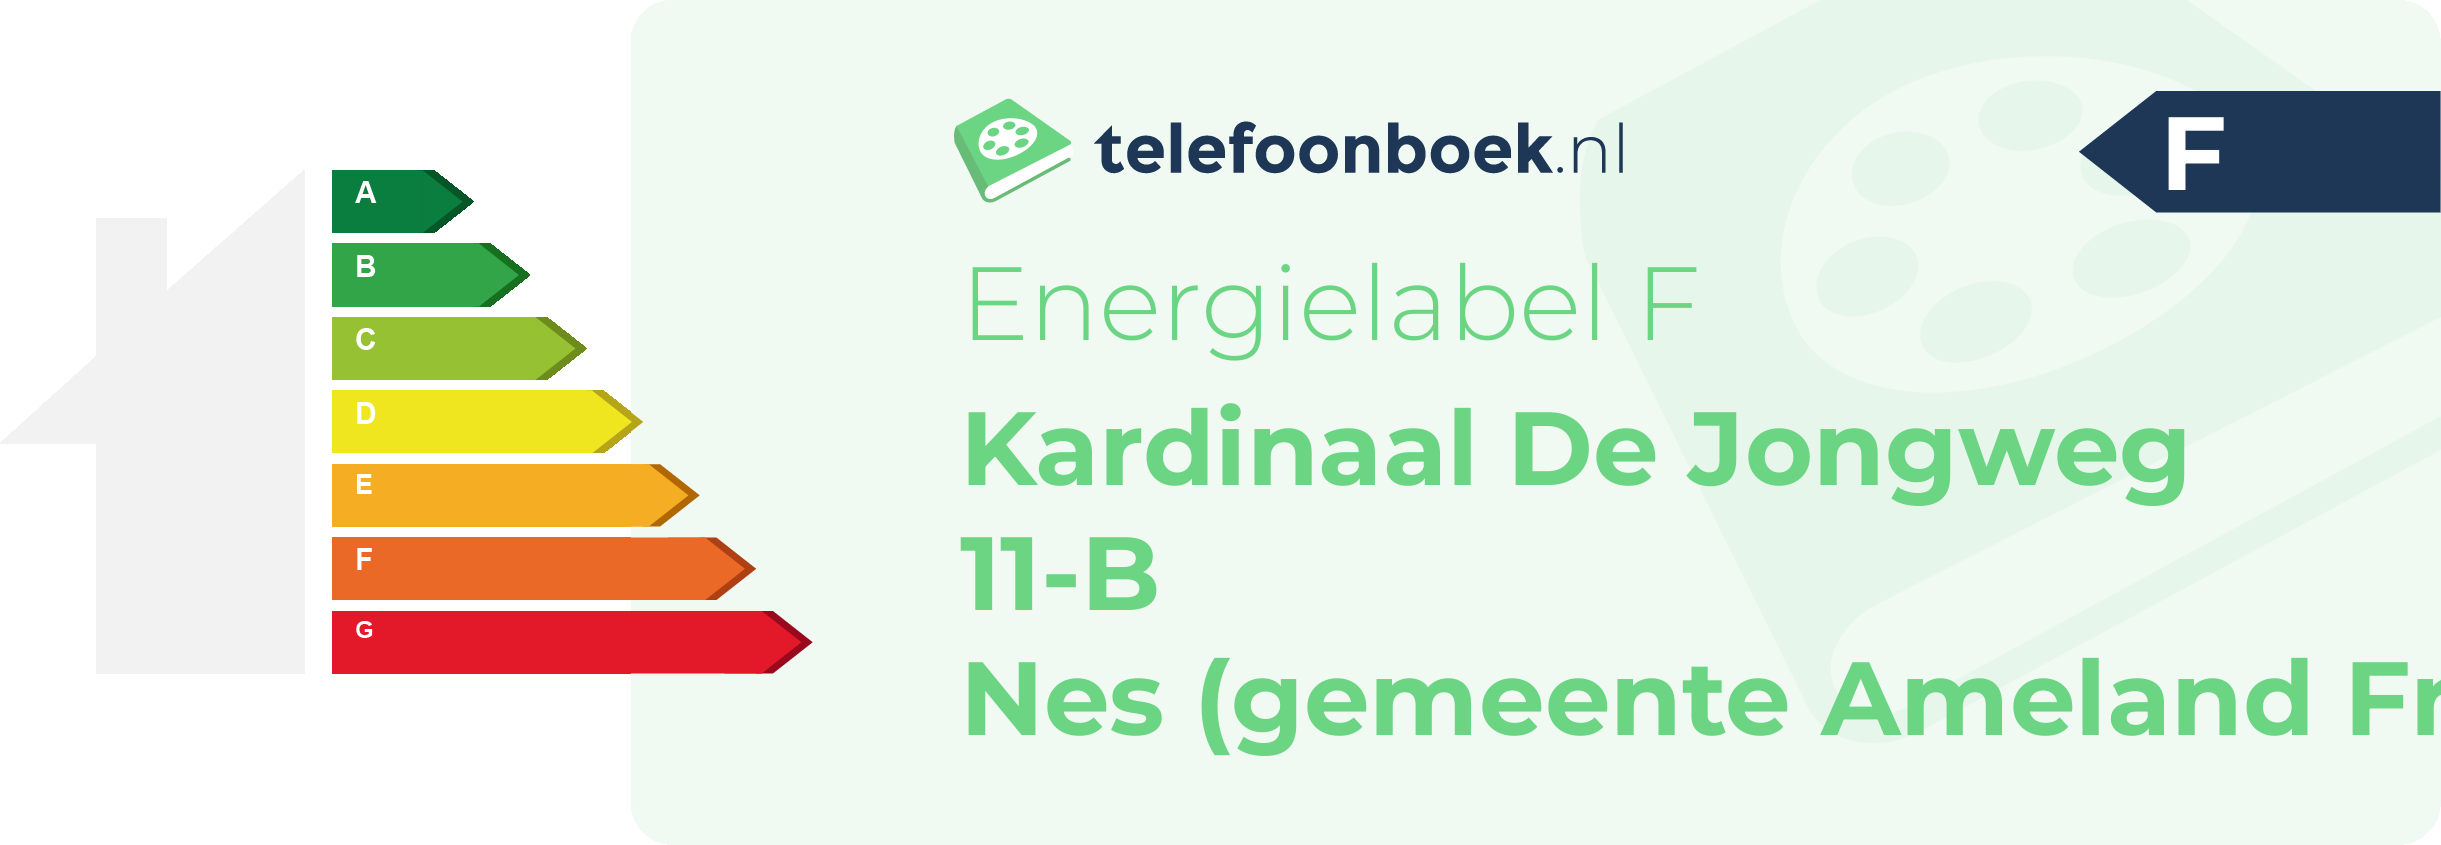 Energielabel Kardinaal De Jongweg 11-B Nes (gemeente Ameland Friesland)